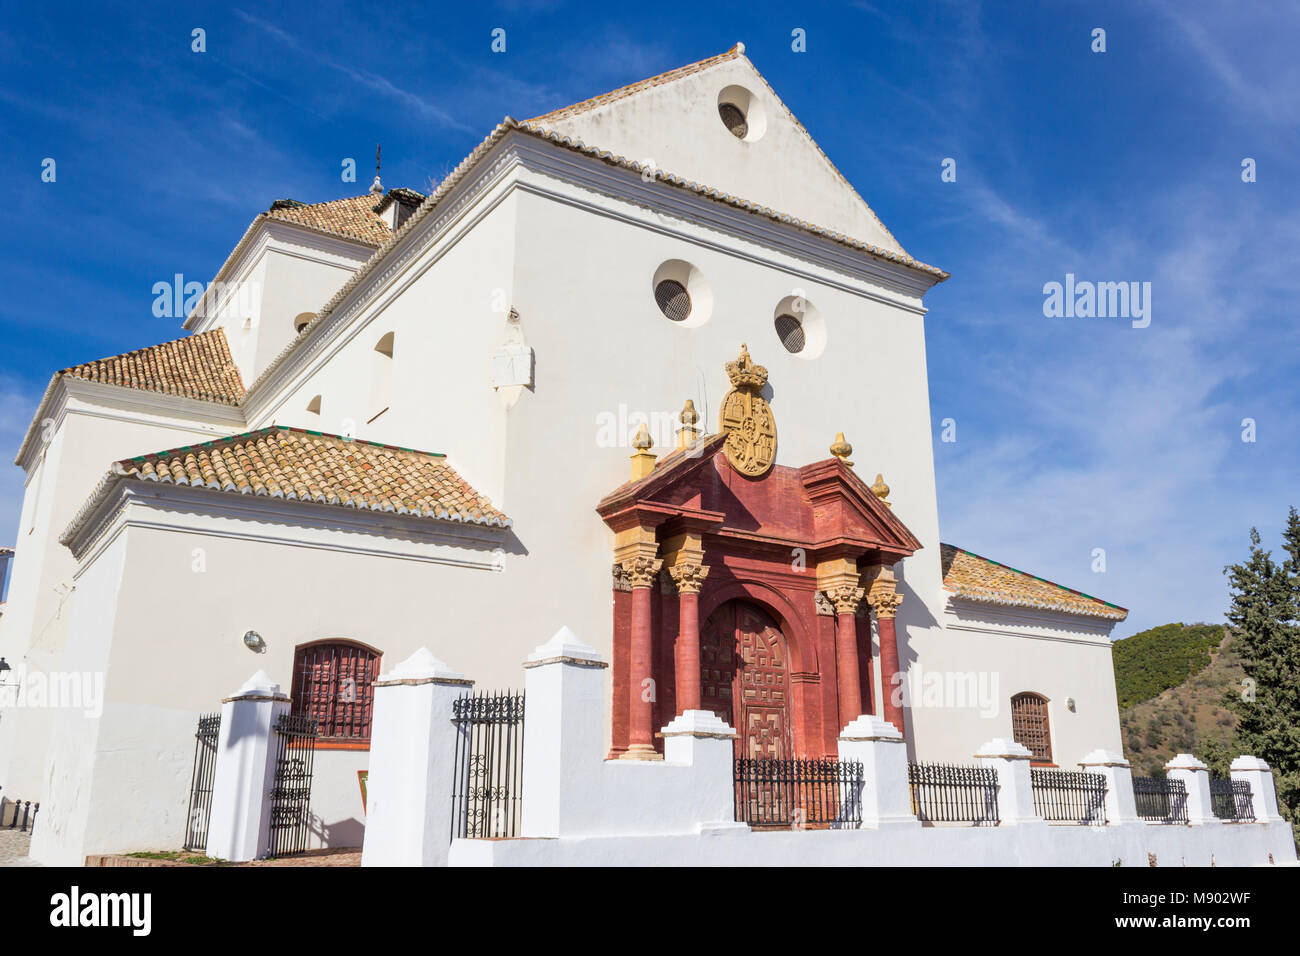 Macharaviaya, Málaga, Spain. Church of San Jacinto. Stock Photo